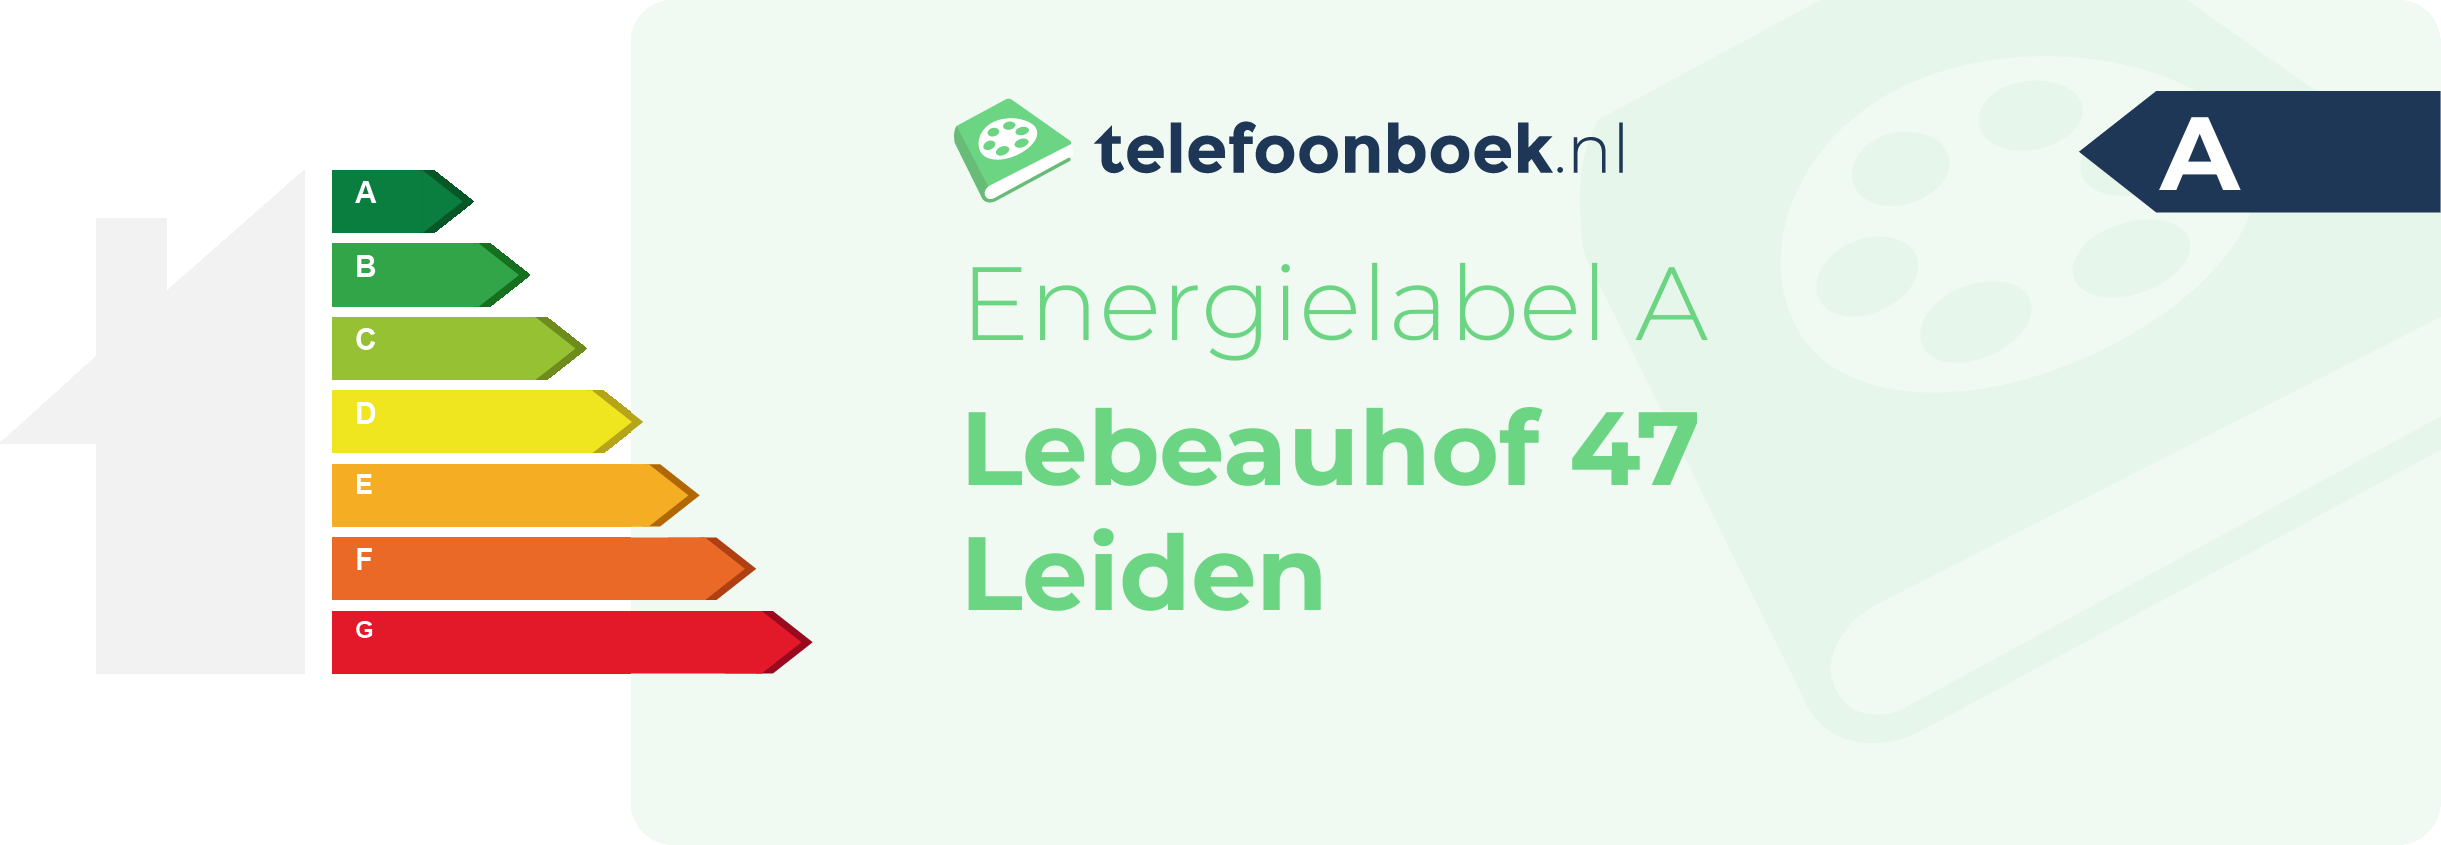 Energielabel Lebeauhof 47 Leiden